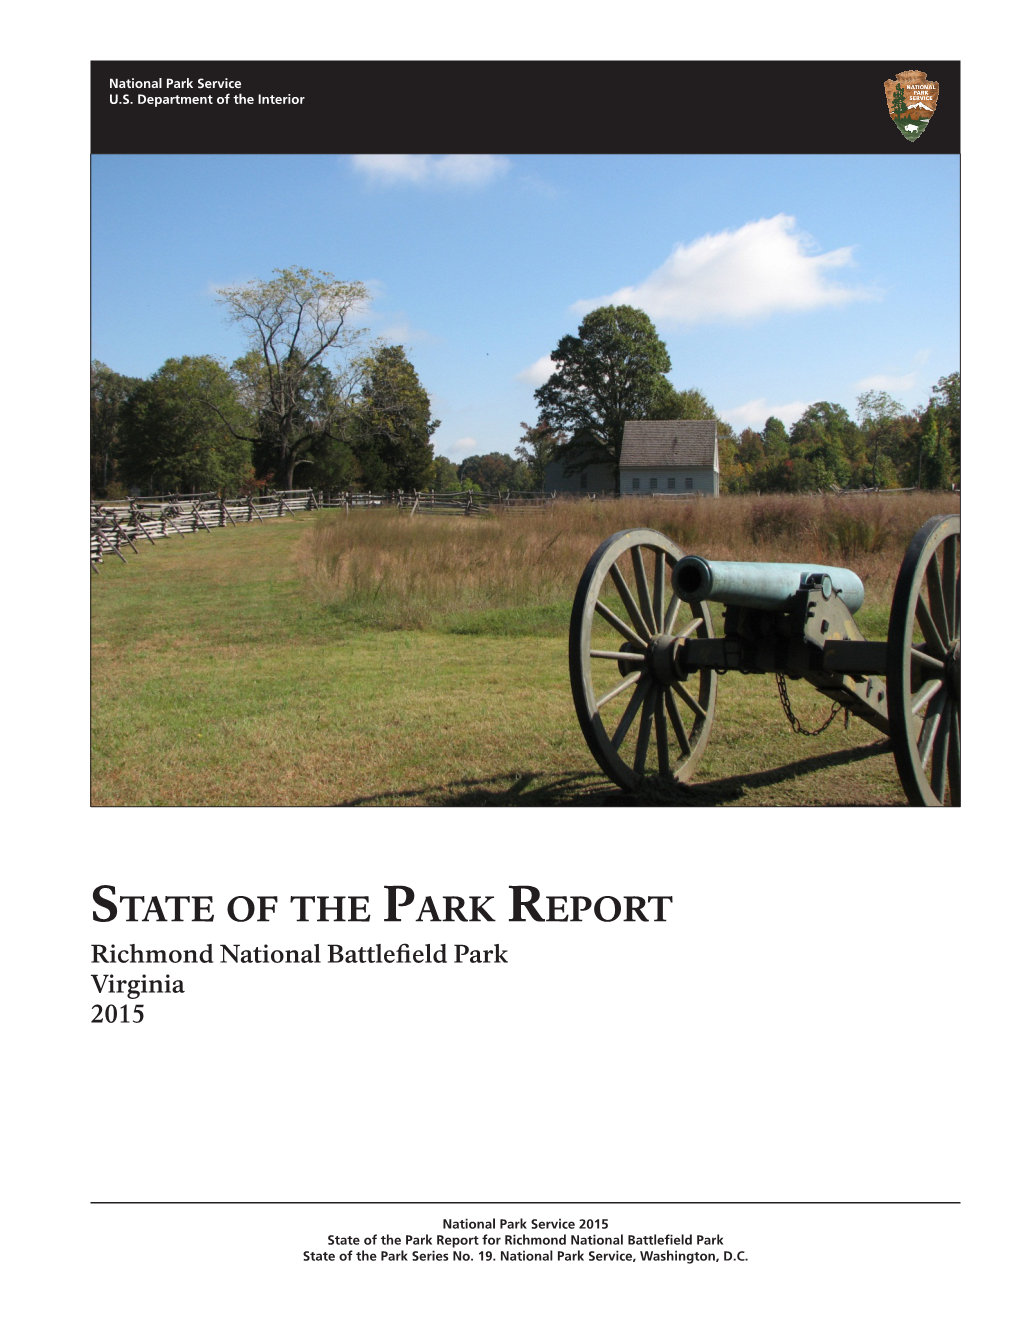 State of the Park Report, Richmond National Battlefield Park, Virginia